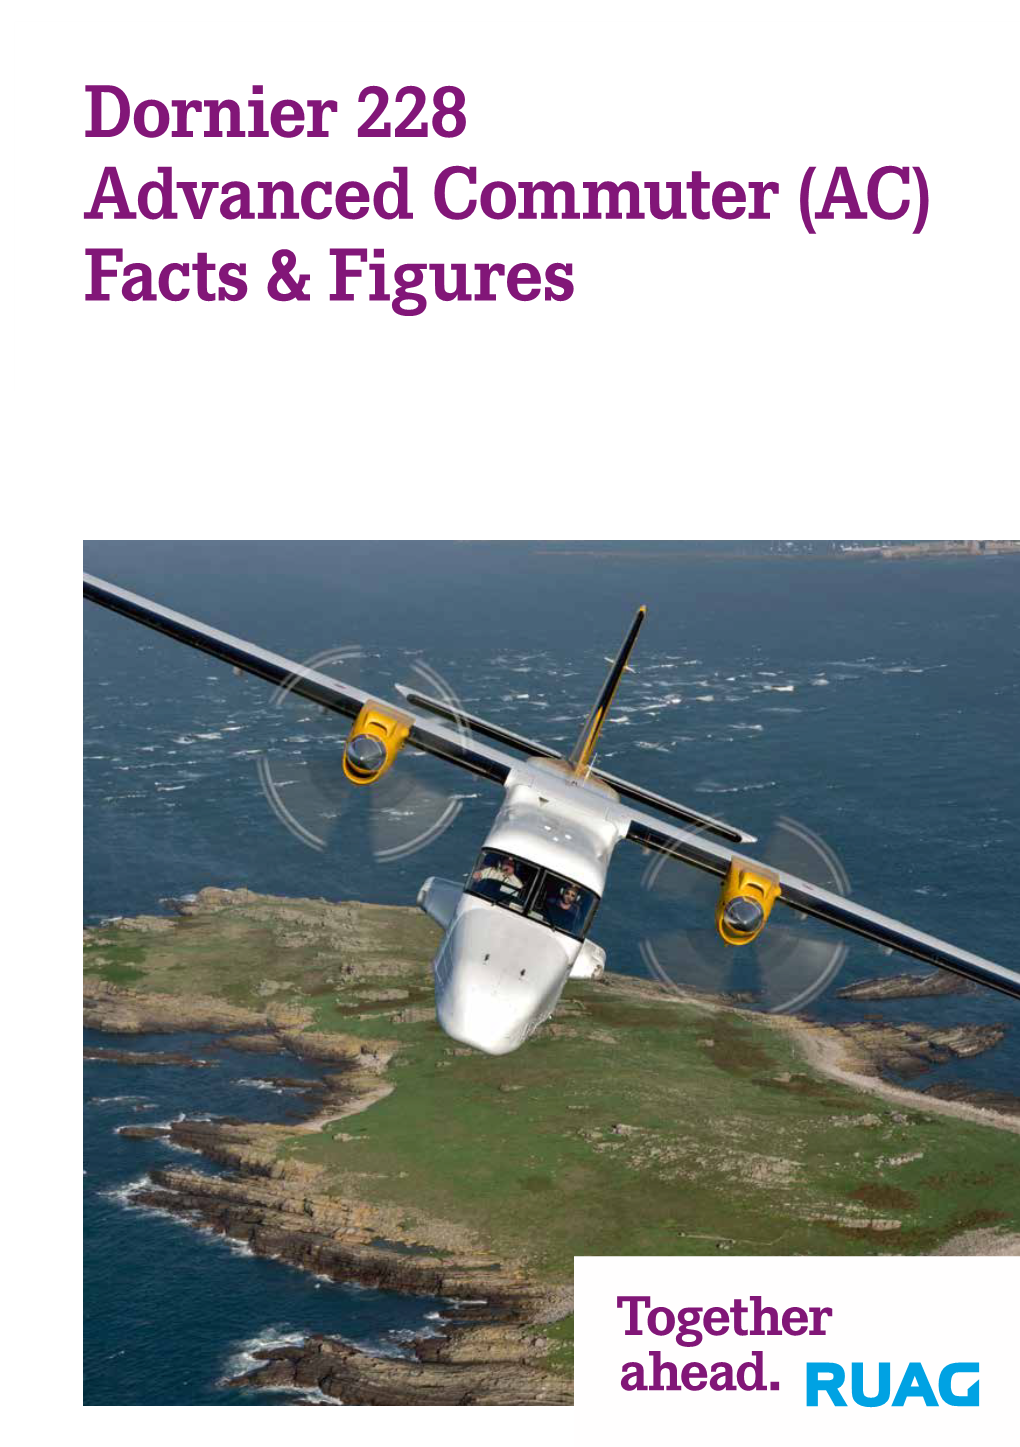 Dornier 228 Advanced Commuter (AC) Facts & Figures